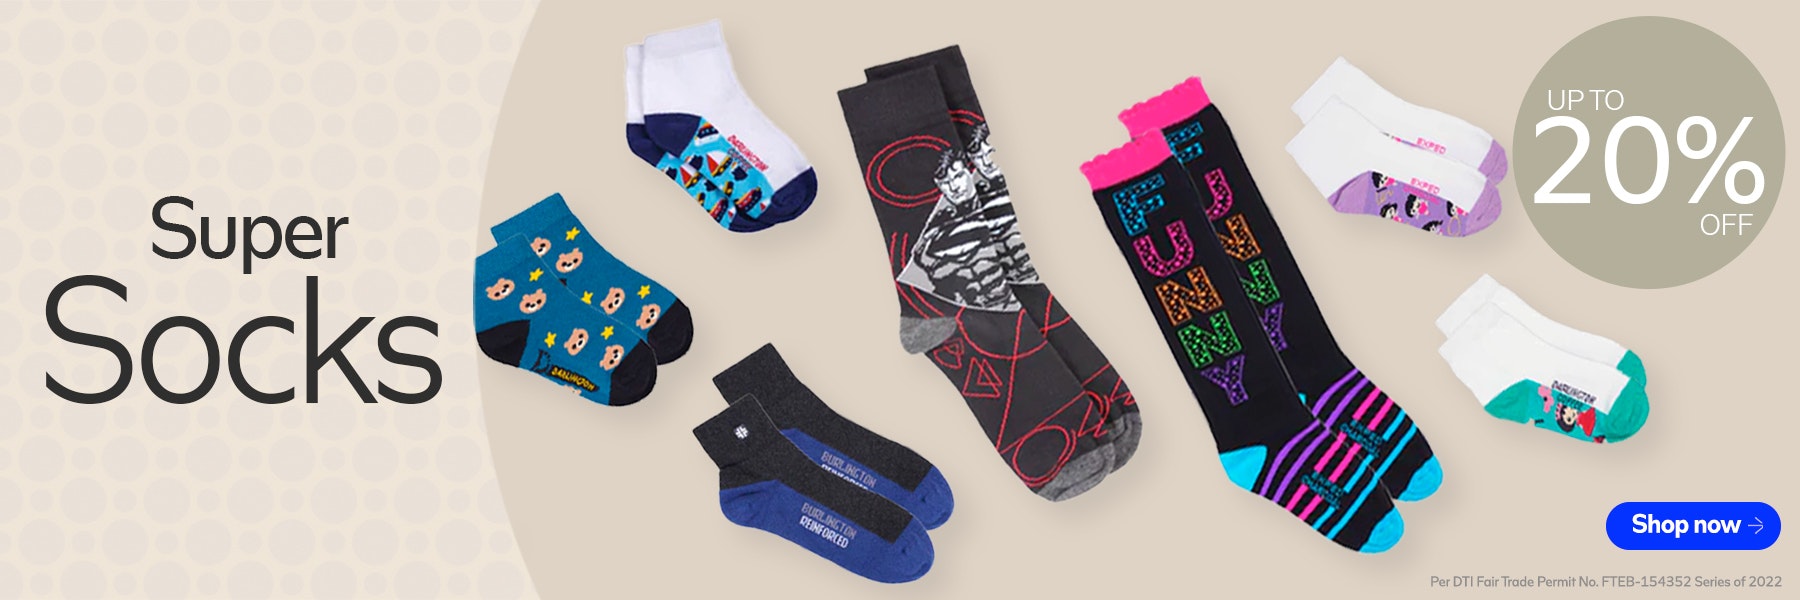 bannerlist-Super Socks